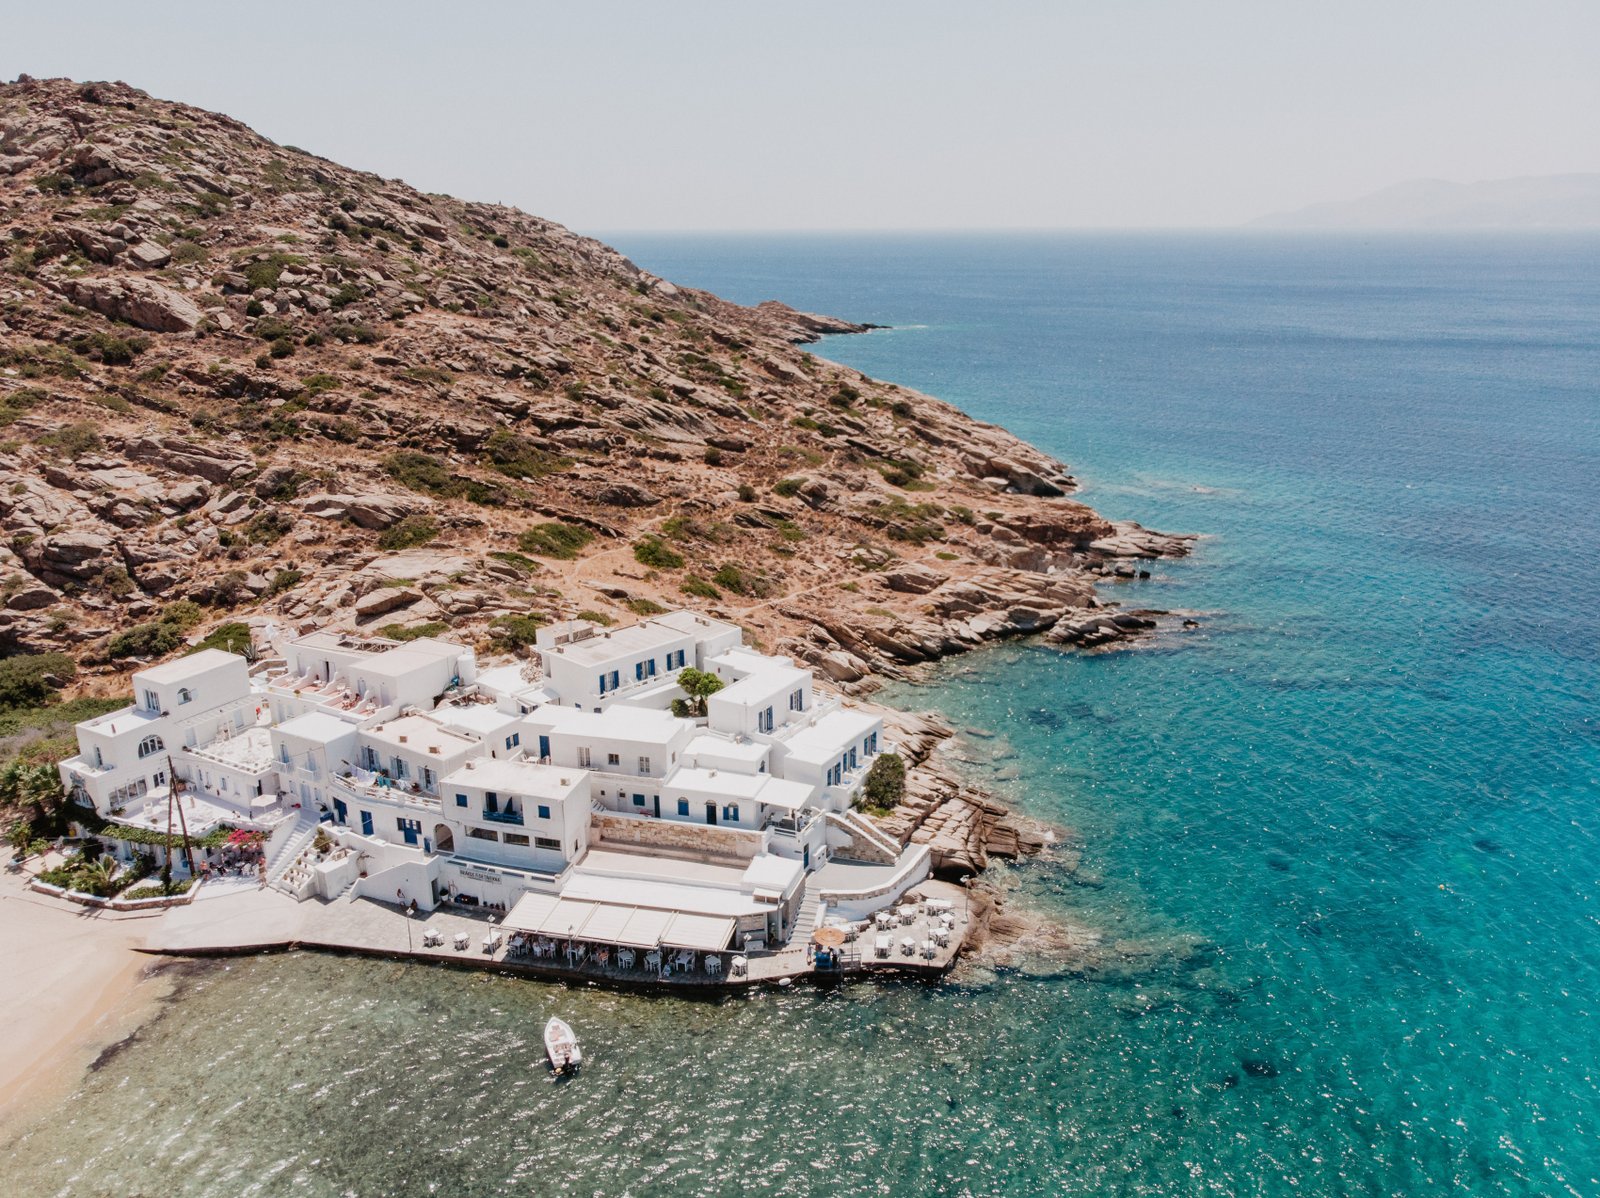 Greece is a Top Choice for Destination Weddings